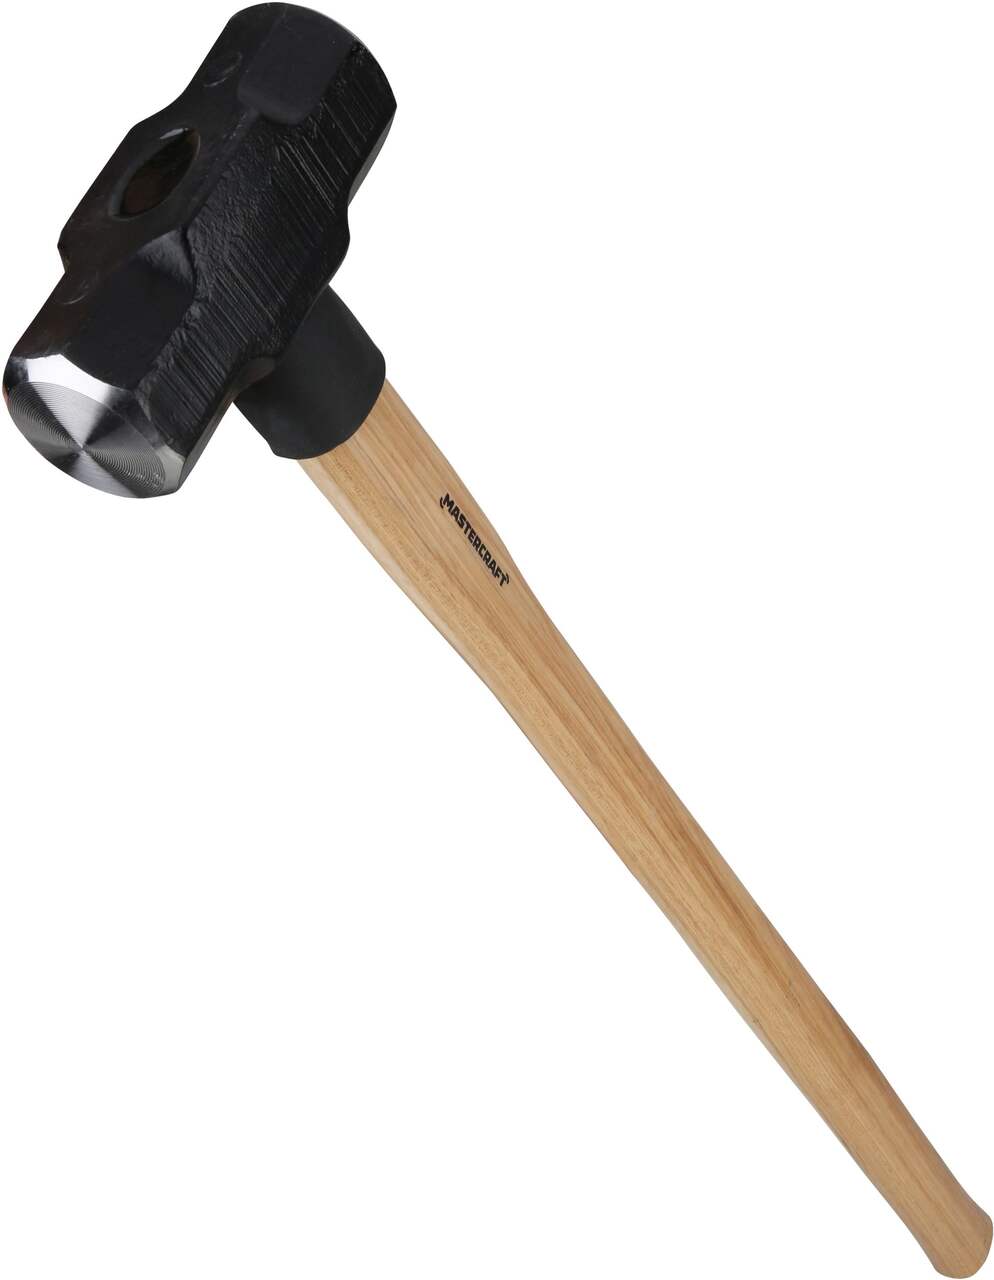 Mastercraft Sledge Hammer with Wood Handle, 8-lb